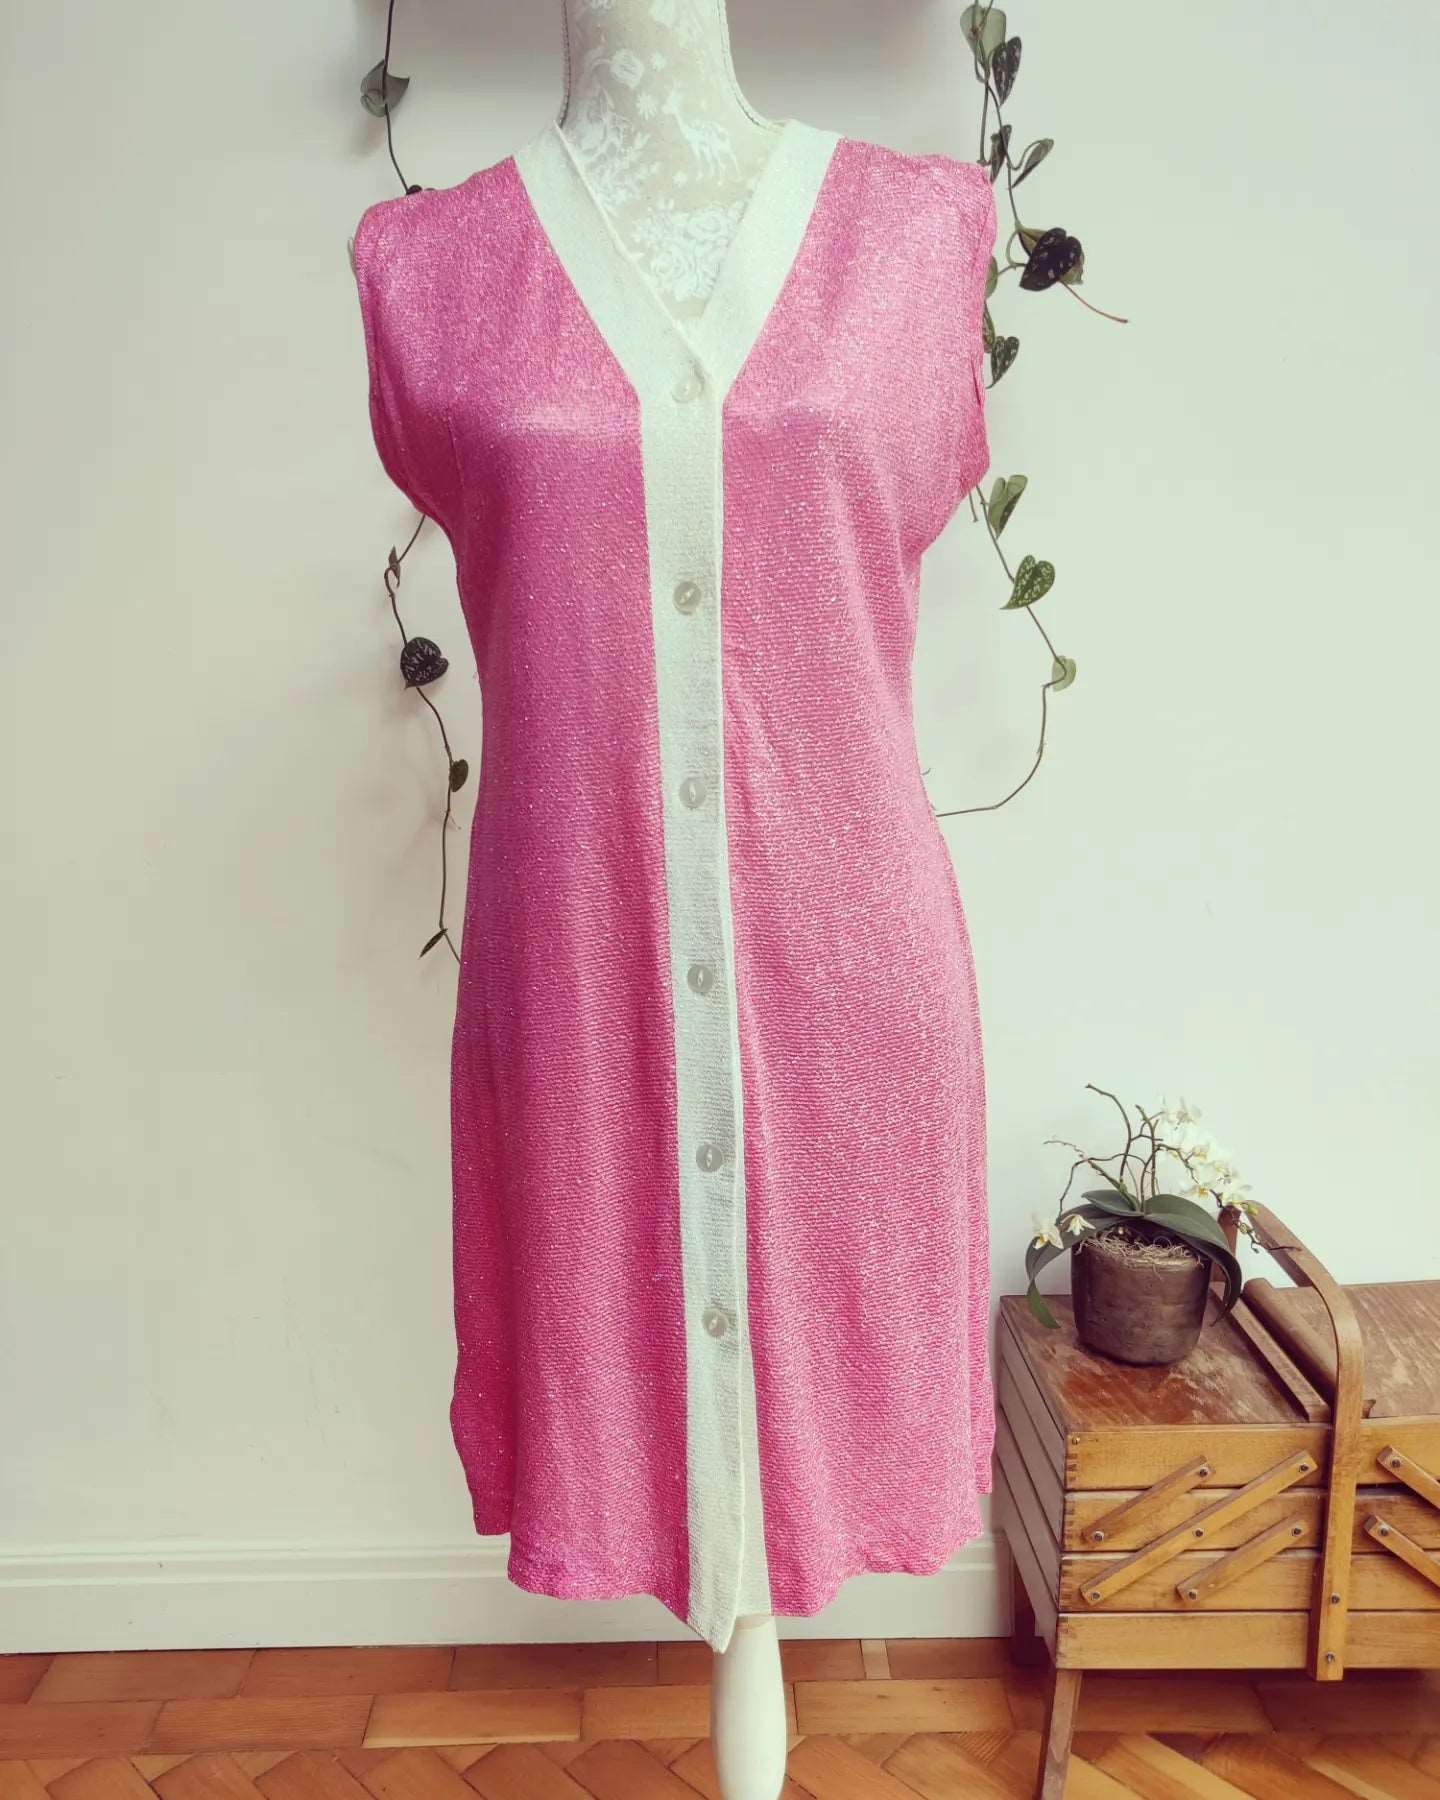 stunning modette pink and white dress. size 12.